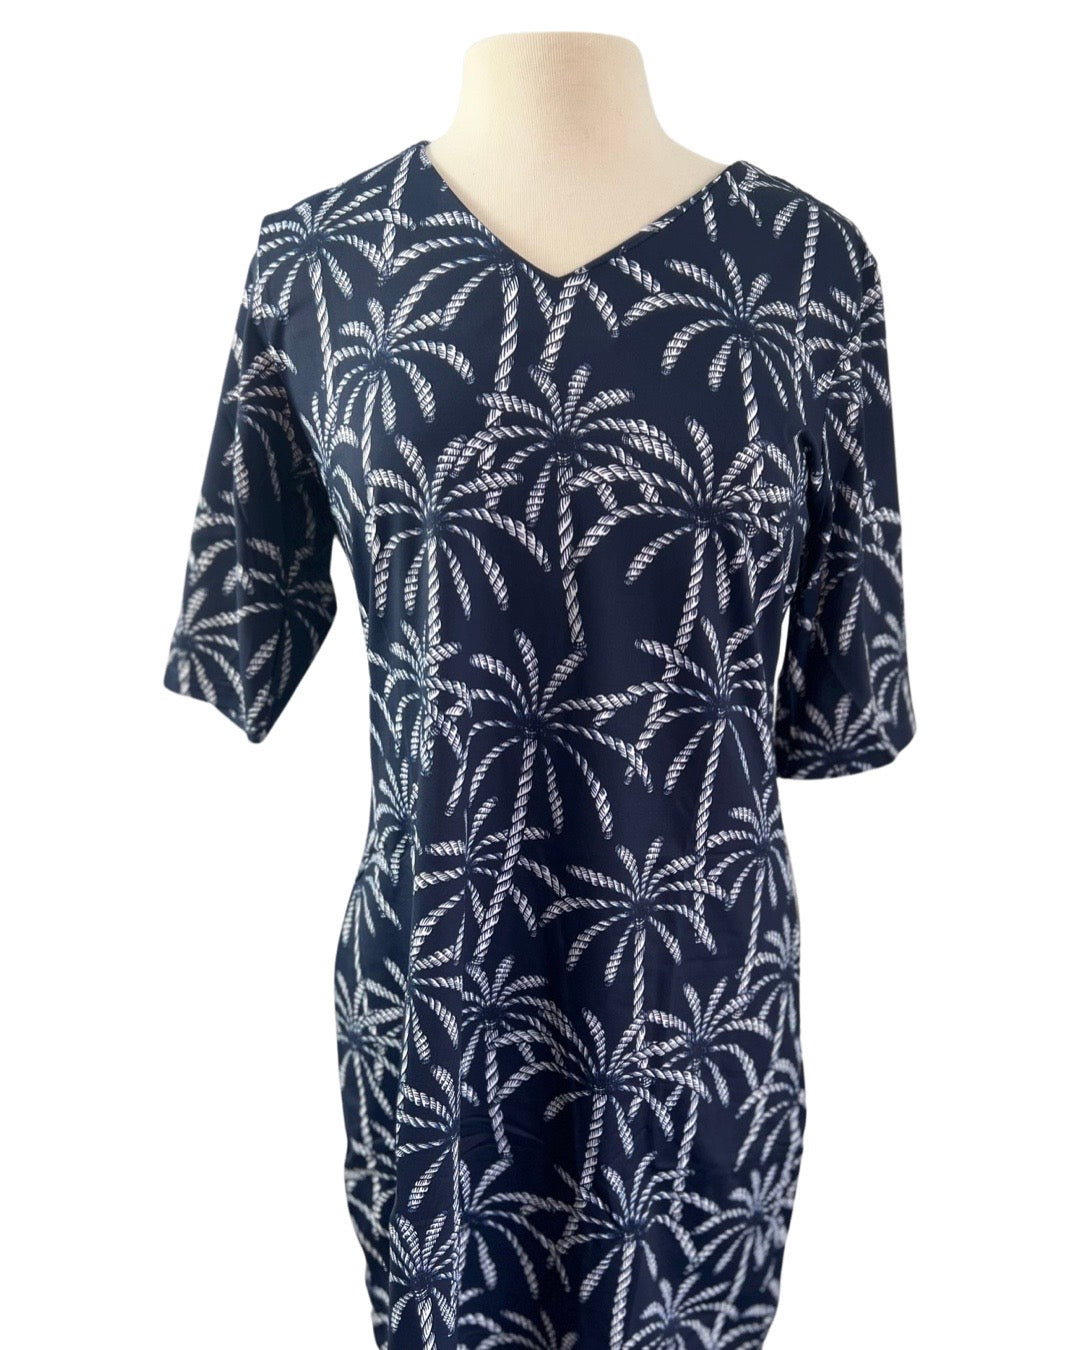 Lulu B Navy Palm Tree Dress